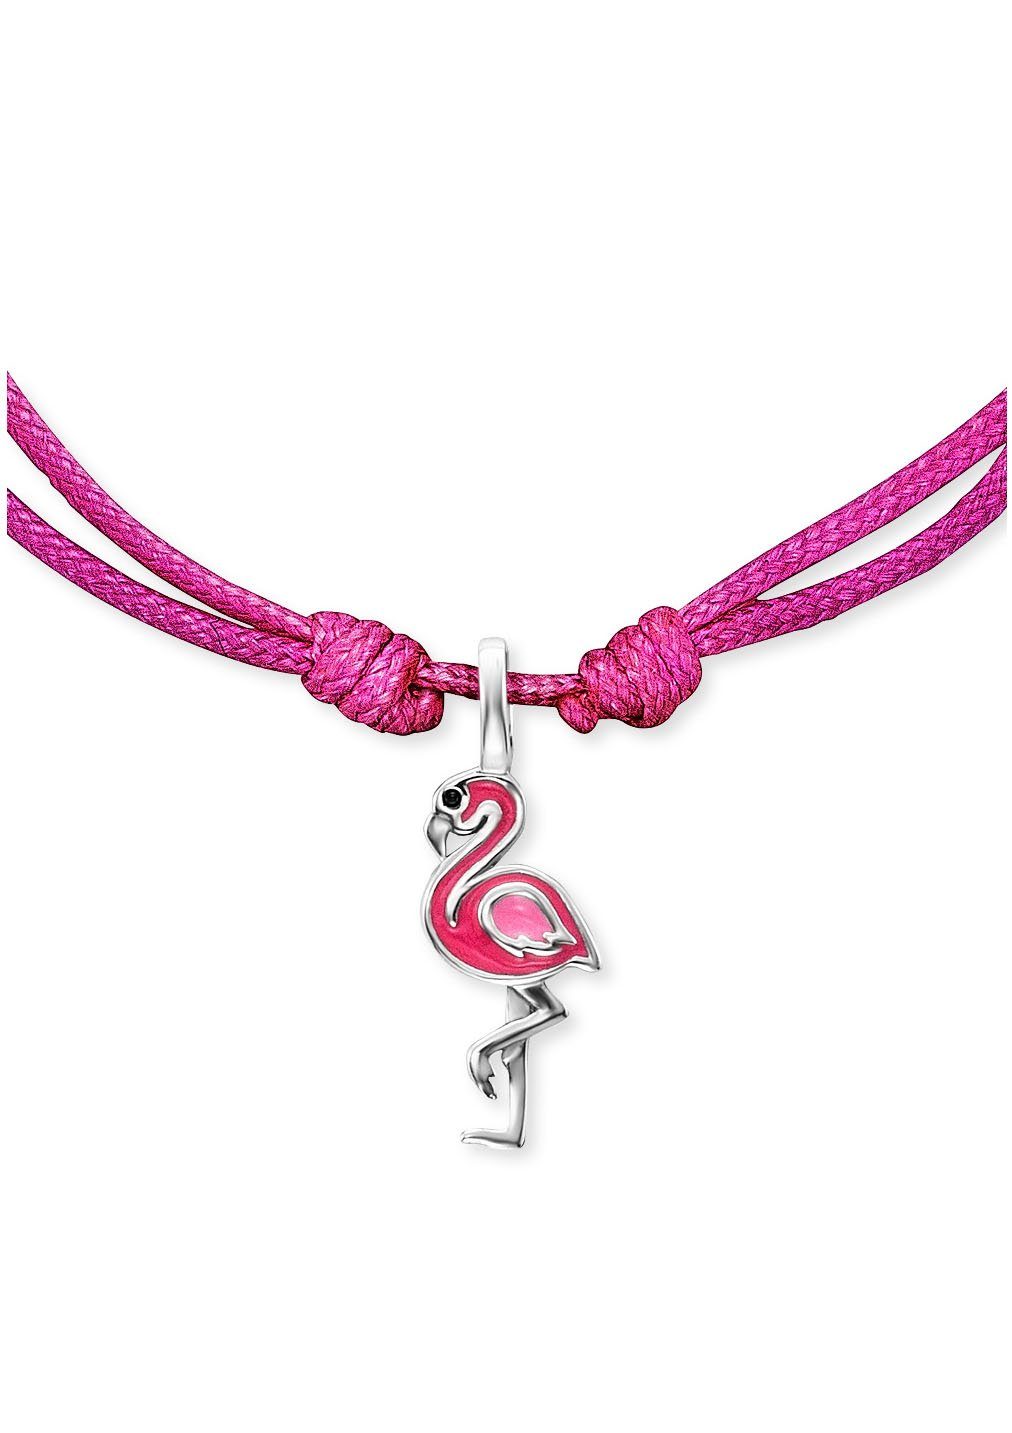 Herzengel Armband Flamingo, Emaille HEB-FLAMINGO, mit